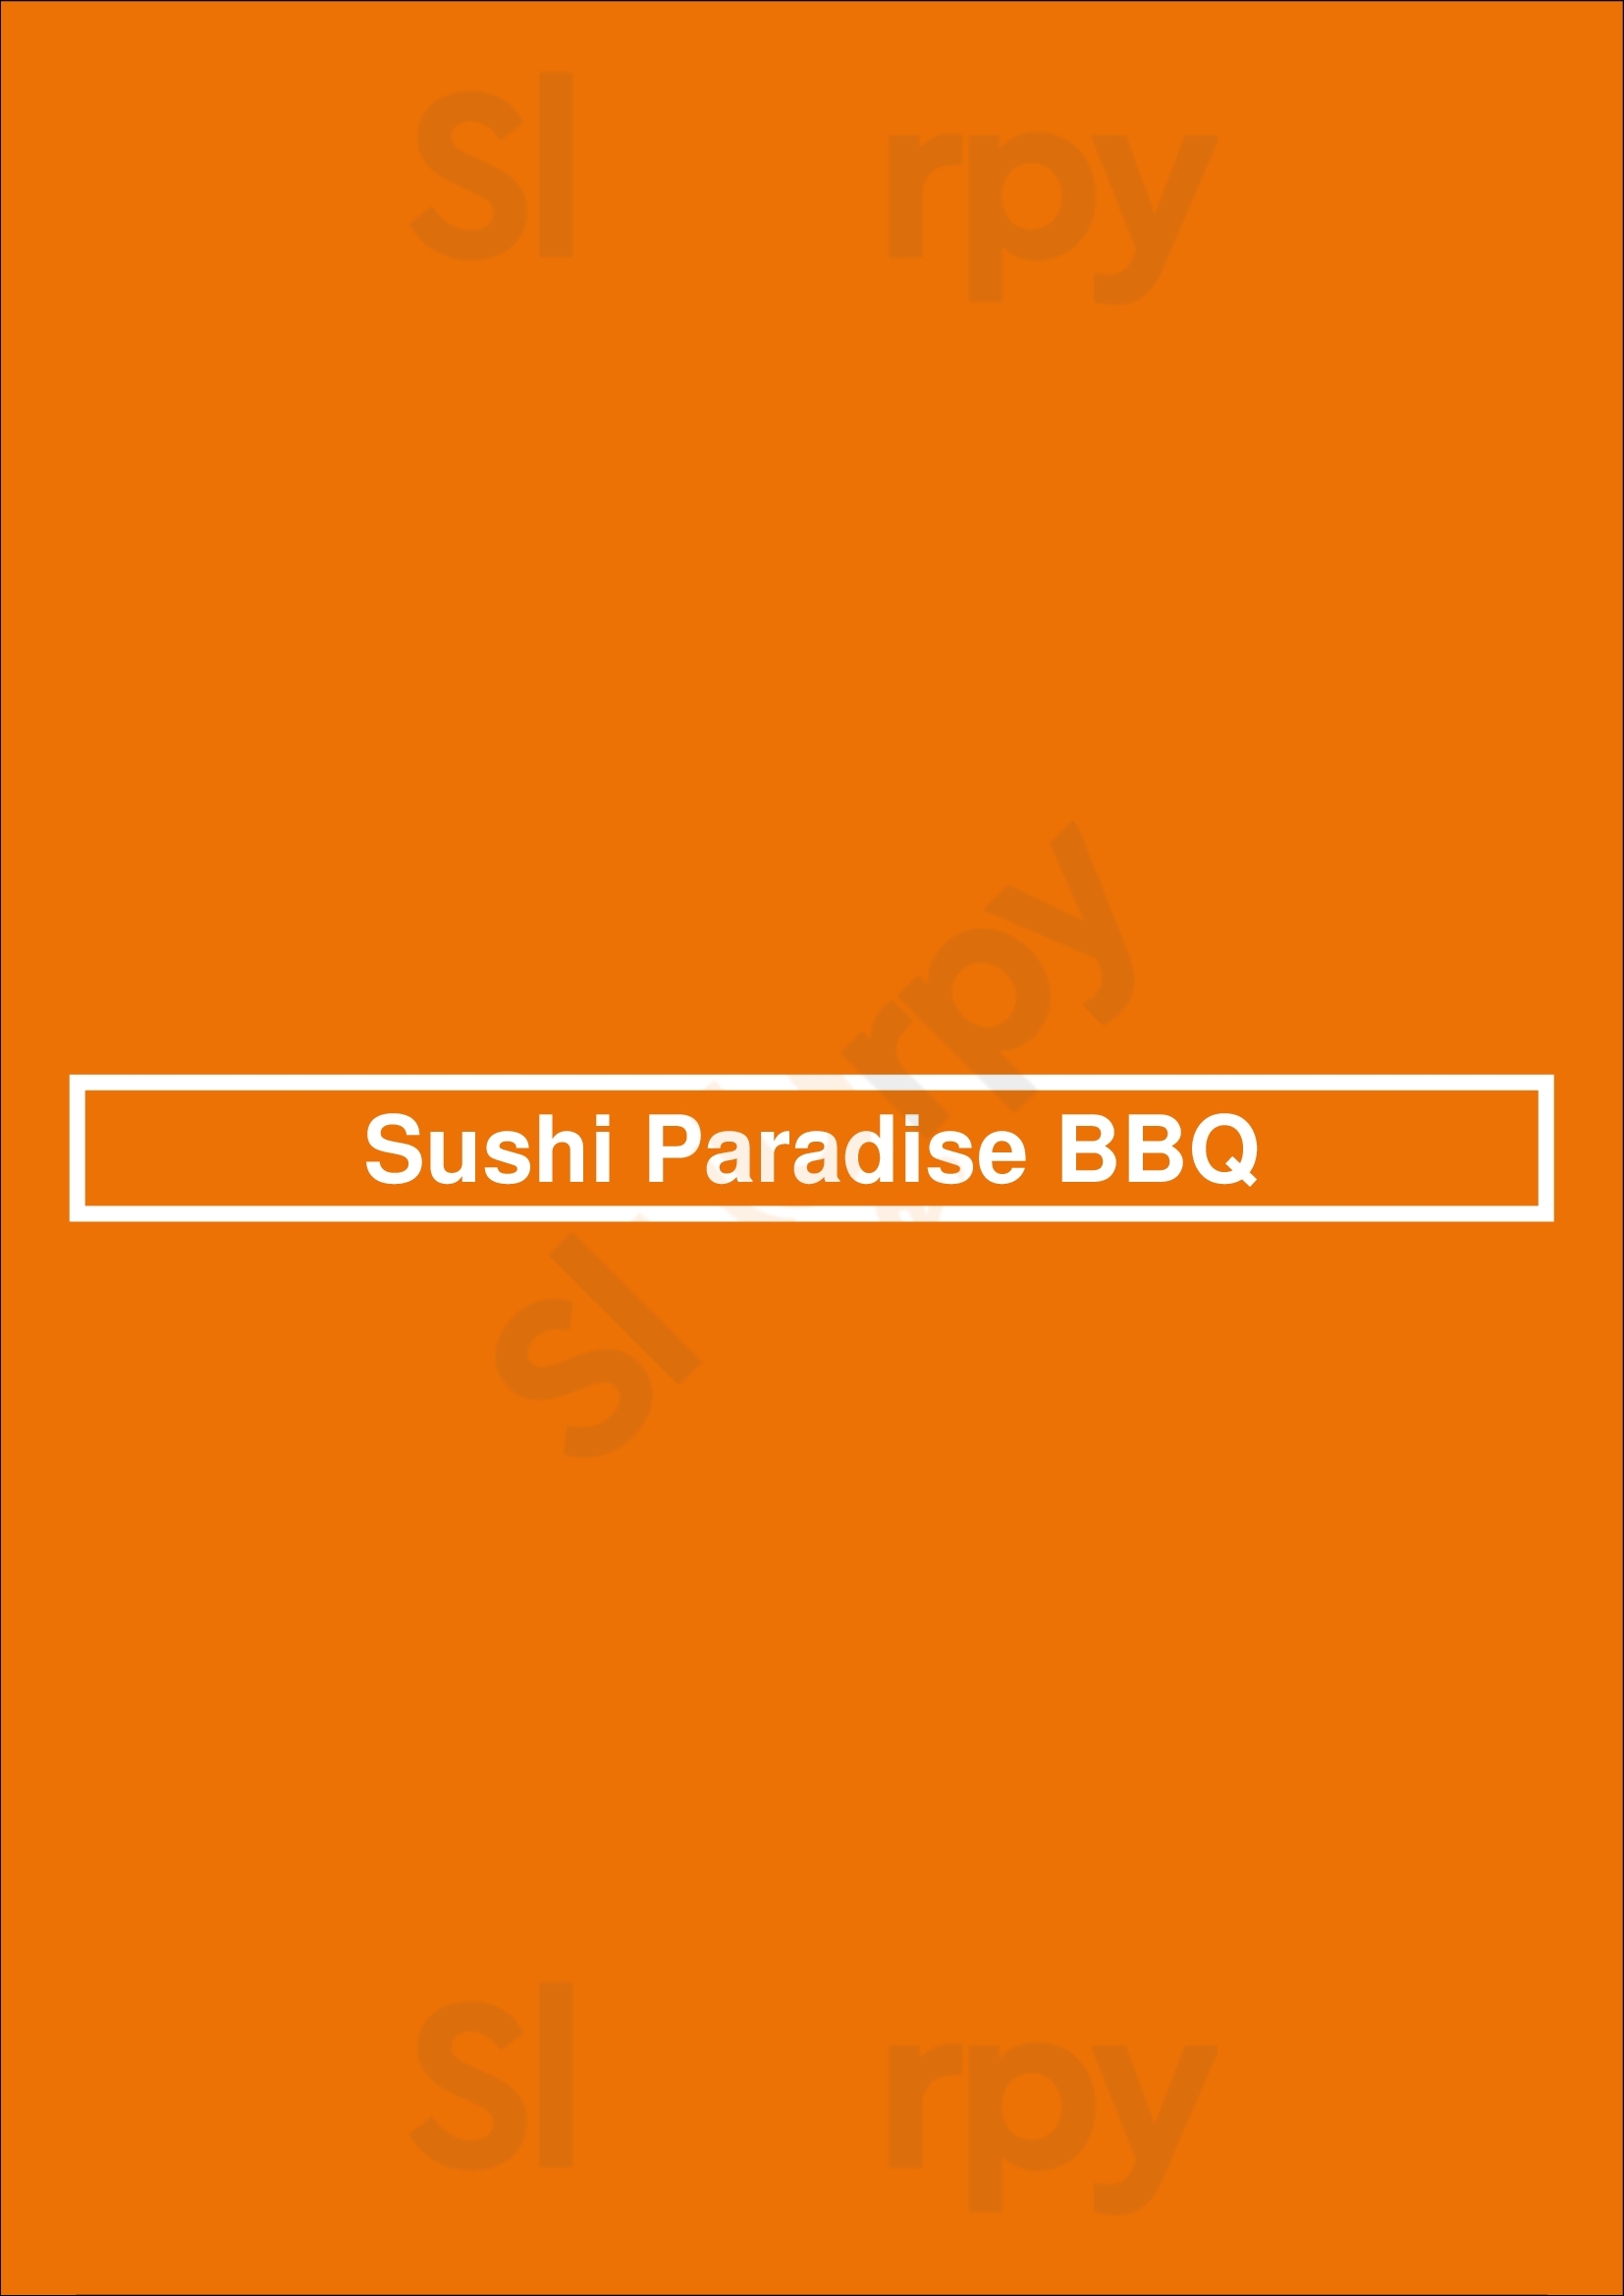 Sushi Paradise Bbq Paris Menu - 1